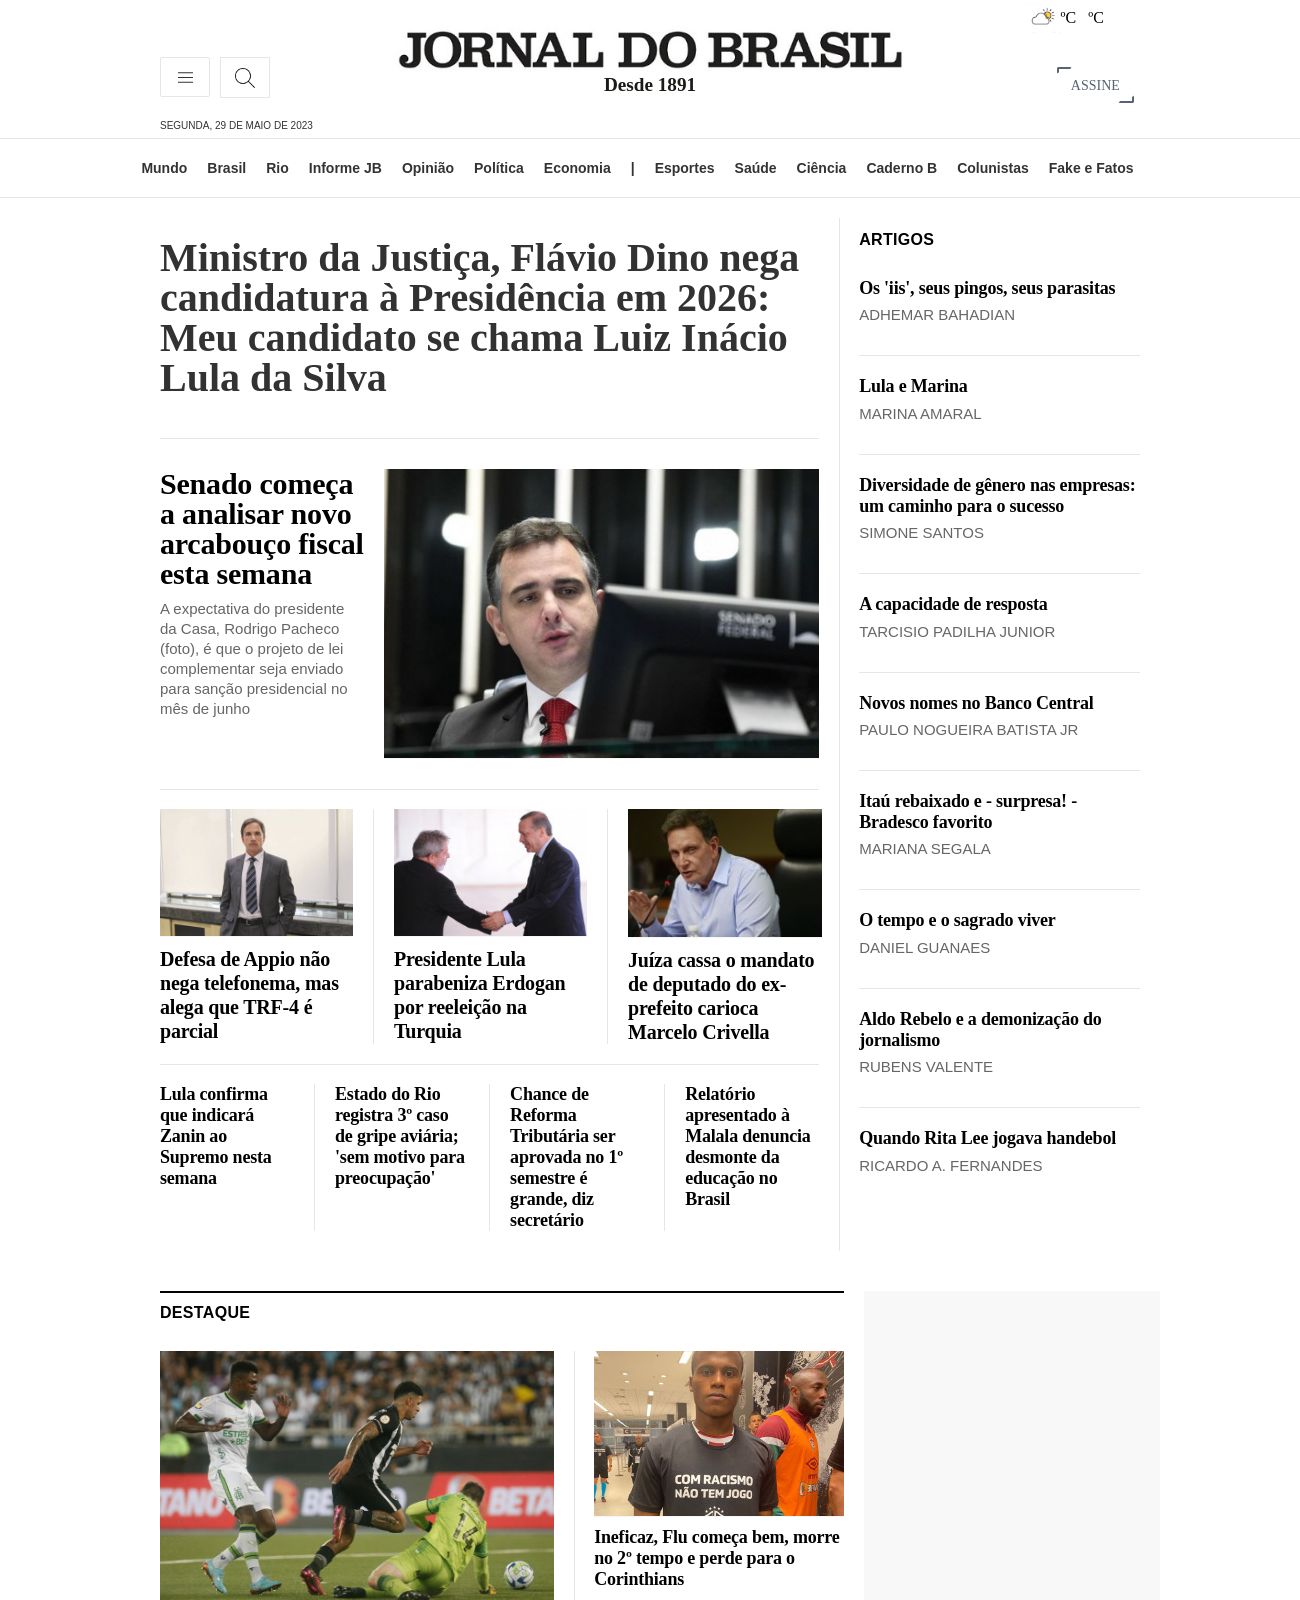 Jornal do Brasil at 2023-05-29 08:10:54-03:00 local time